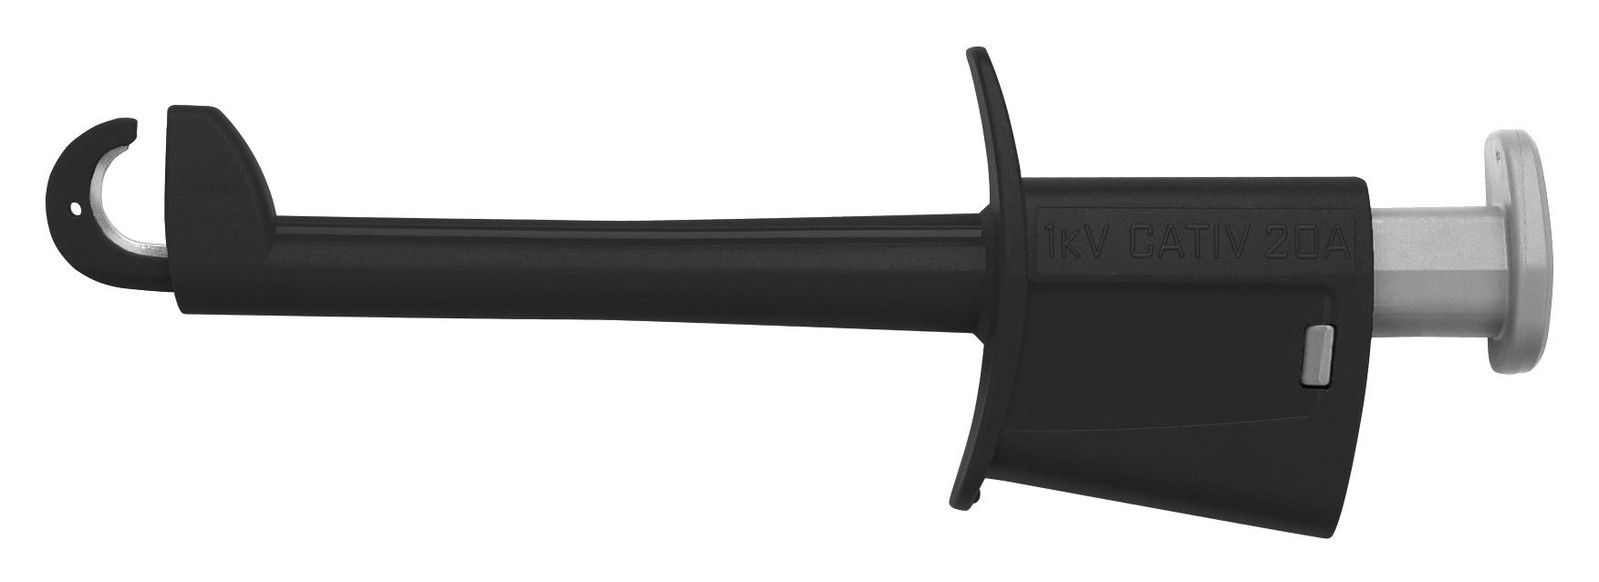 Schutzinger Skps 8341 Ni / Sw Safety Hook Clip, 4Mm Test Probe, Black